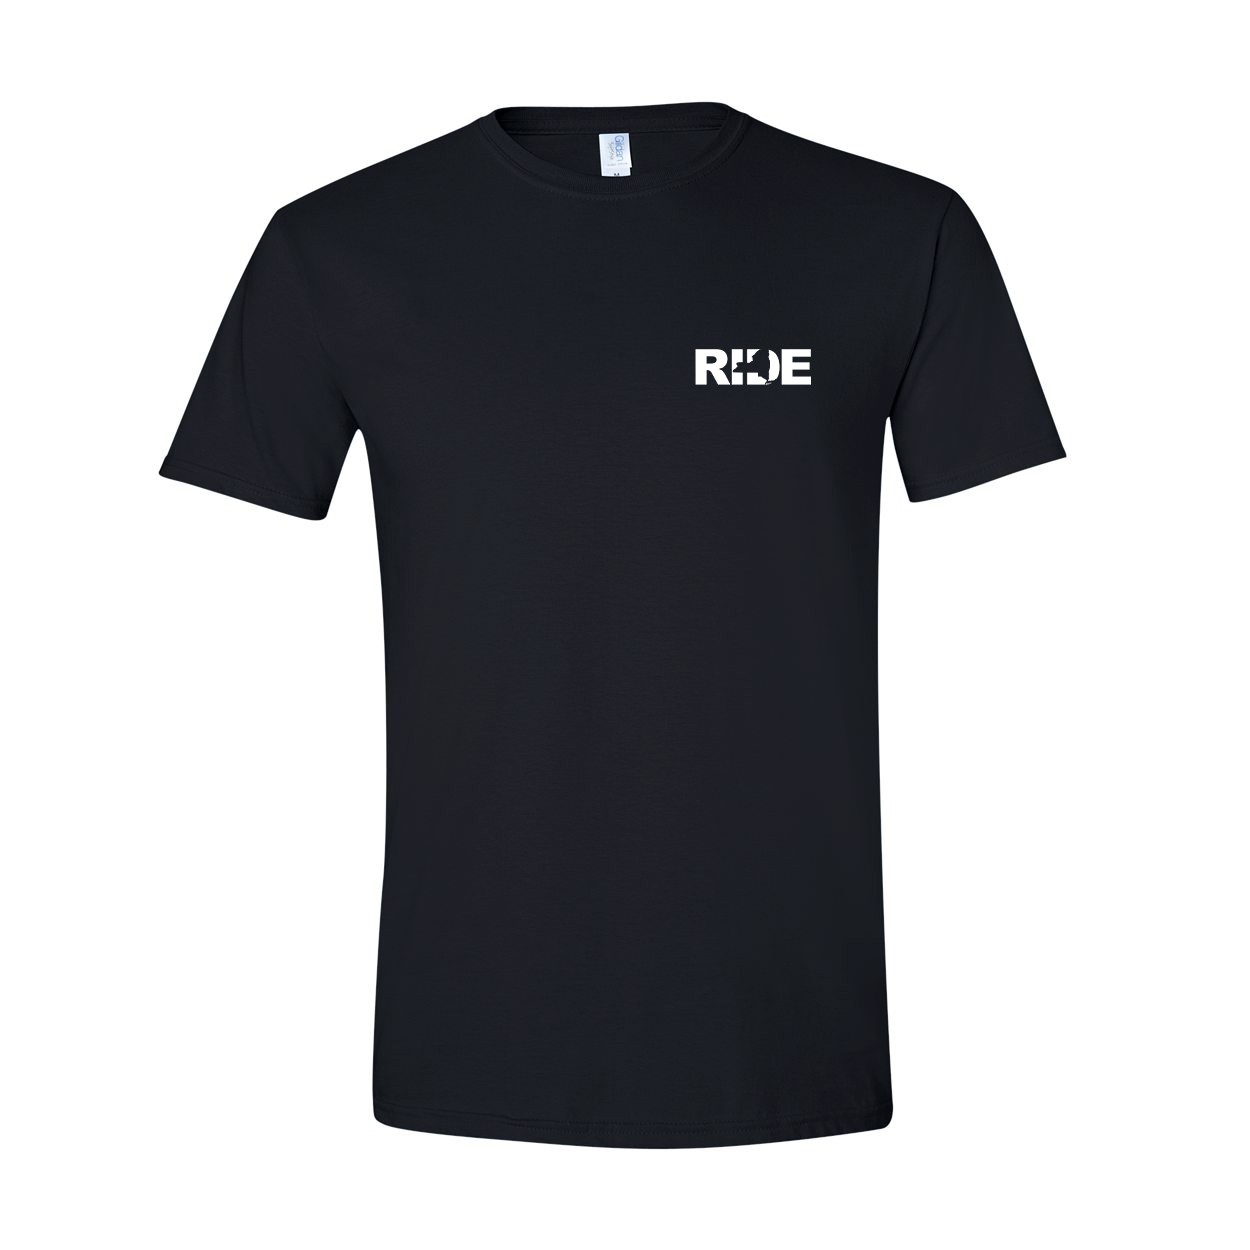 Ride New York Night Out T-Shirt Black (White Logo)